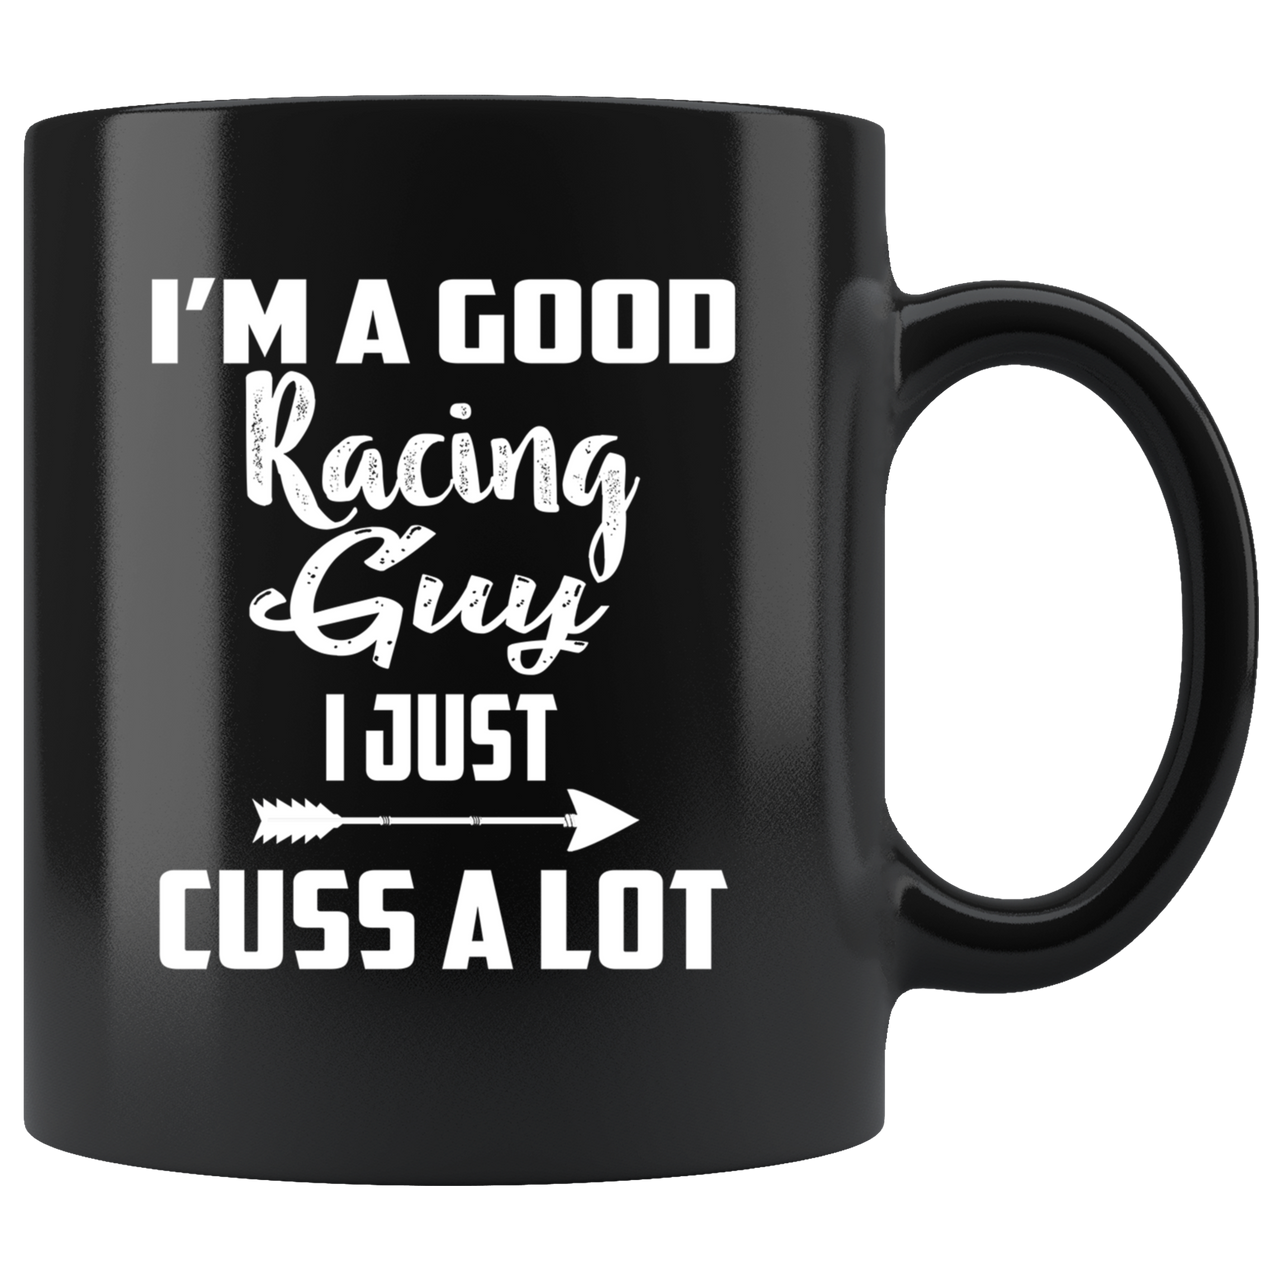 I'm A Good Racing Guy I Just Cuss A Lot Mug!